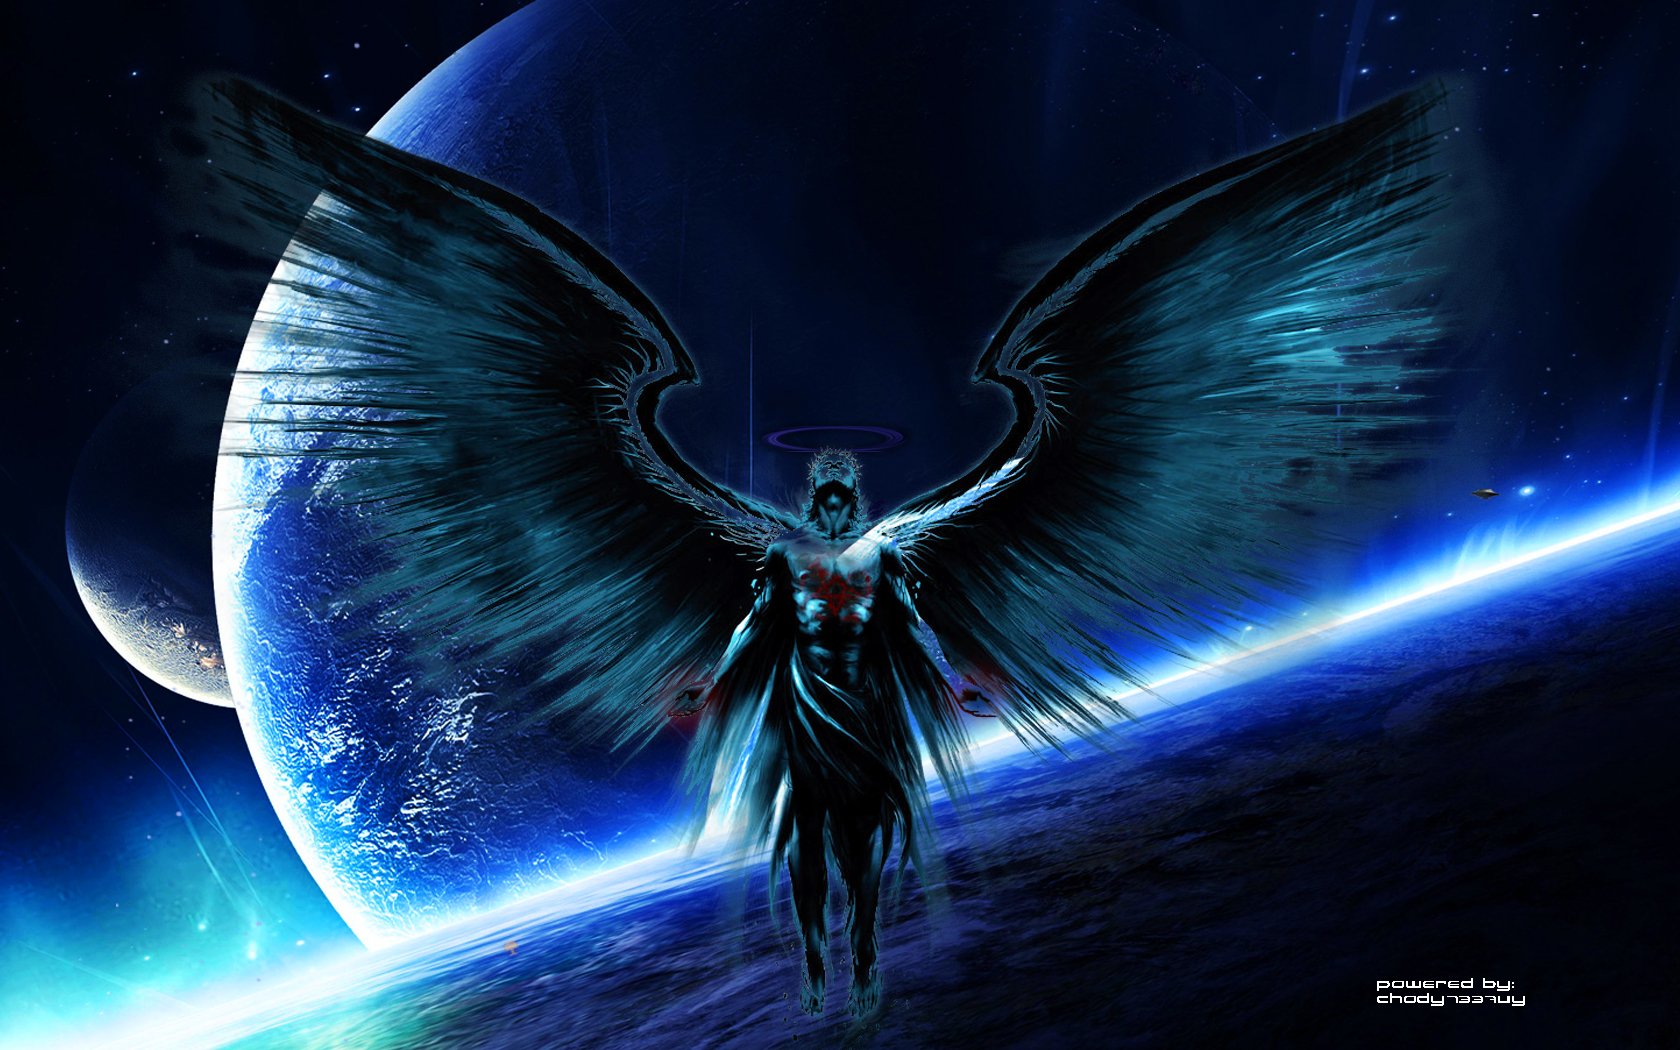 1024x762 / red suicide weapons fantasy art warriors archangel angel wings  war wallpaper - Coolwallpapers.me!